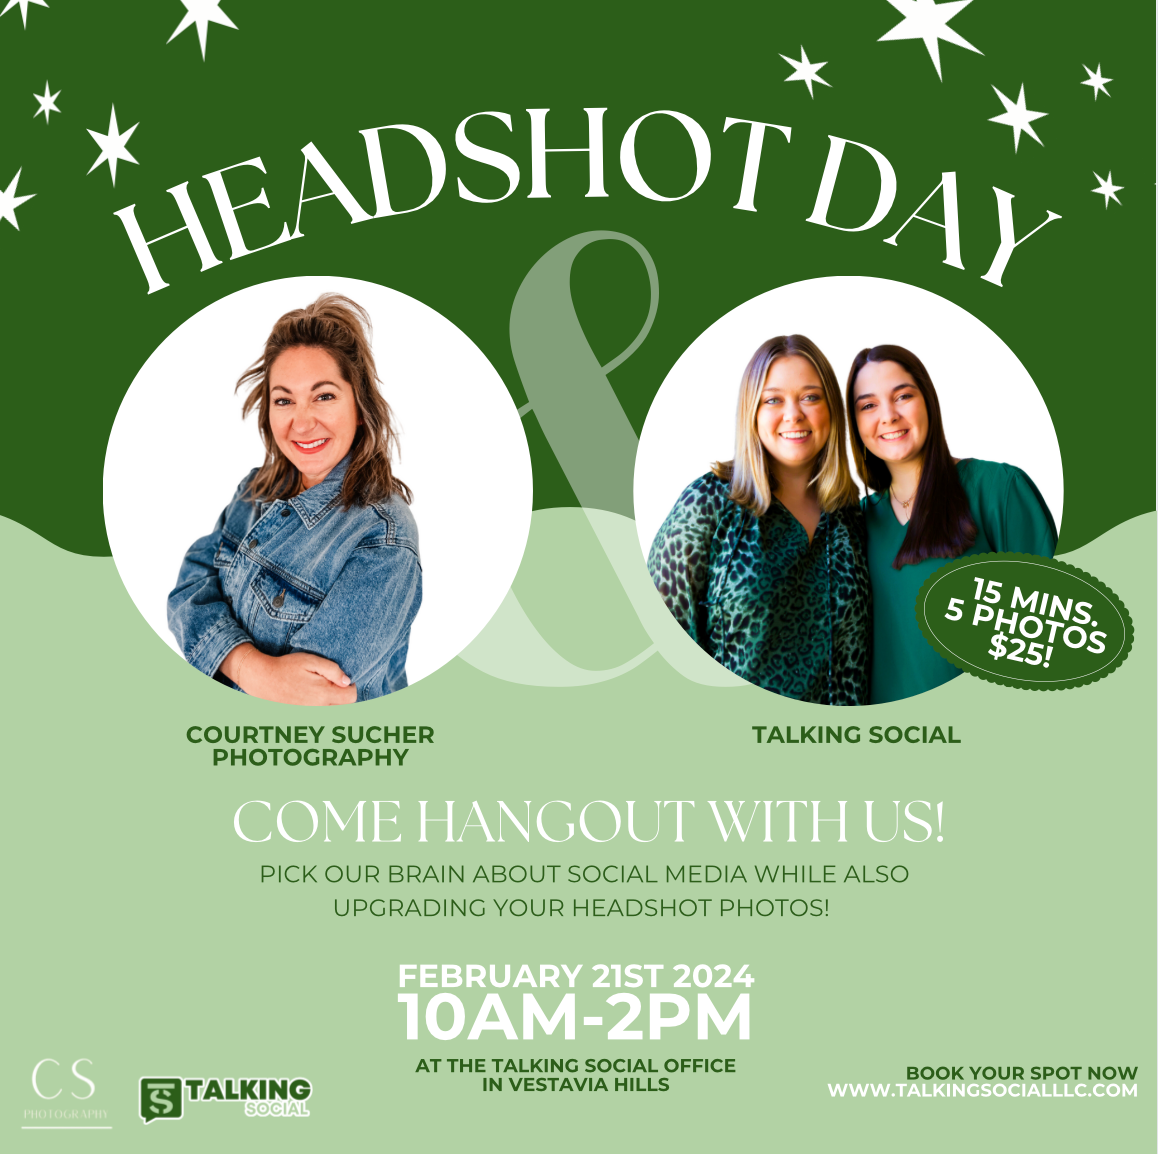 Headshot Day - February 21st 2024